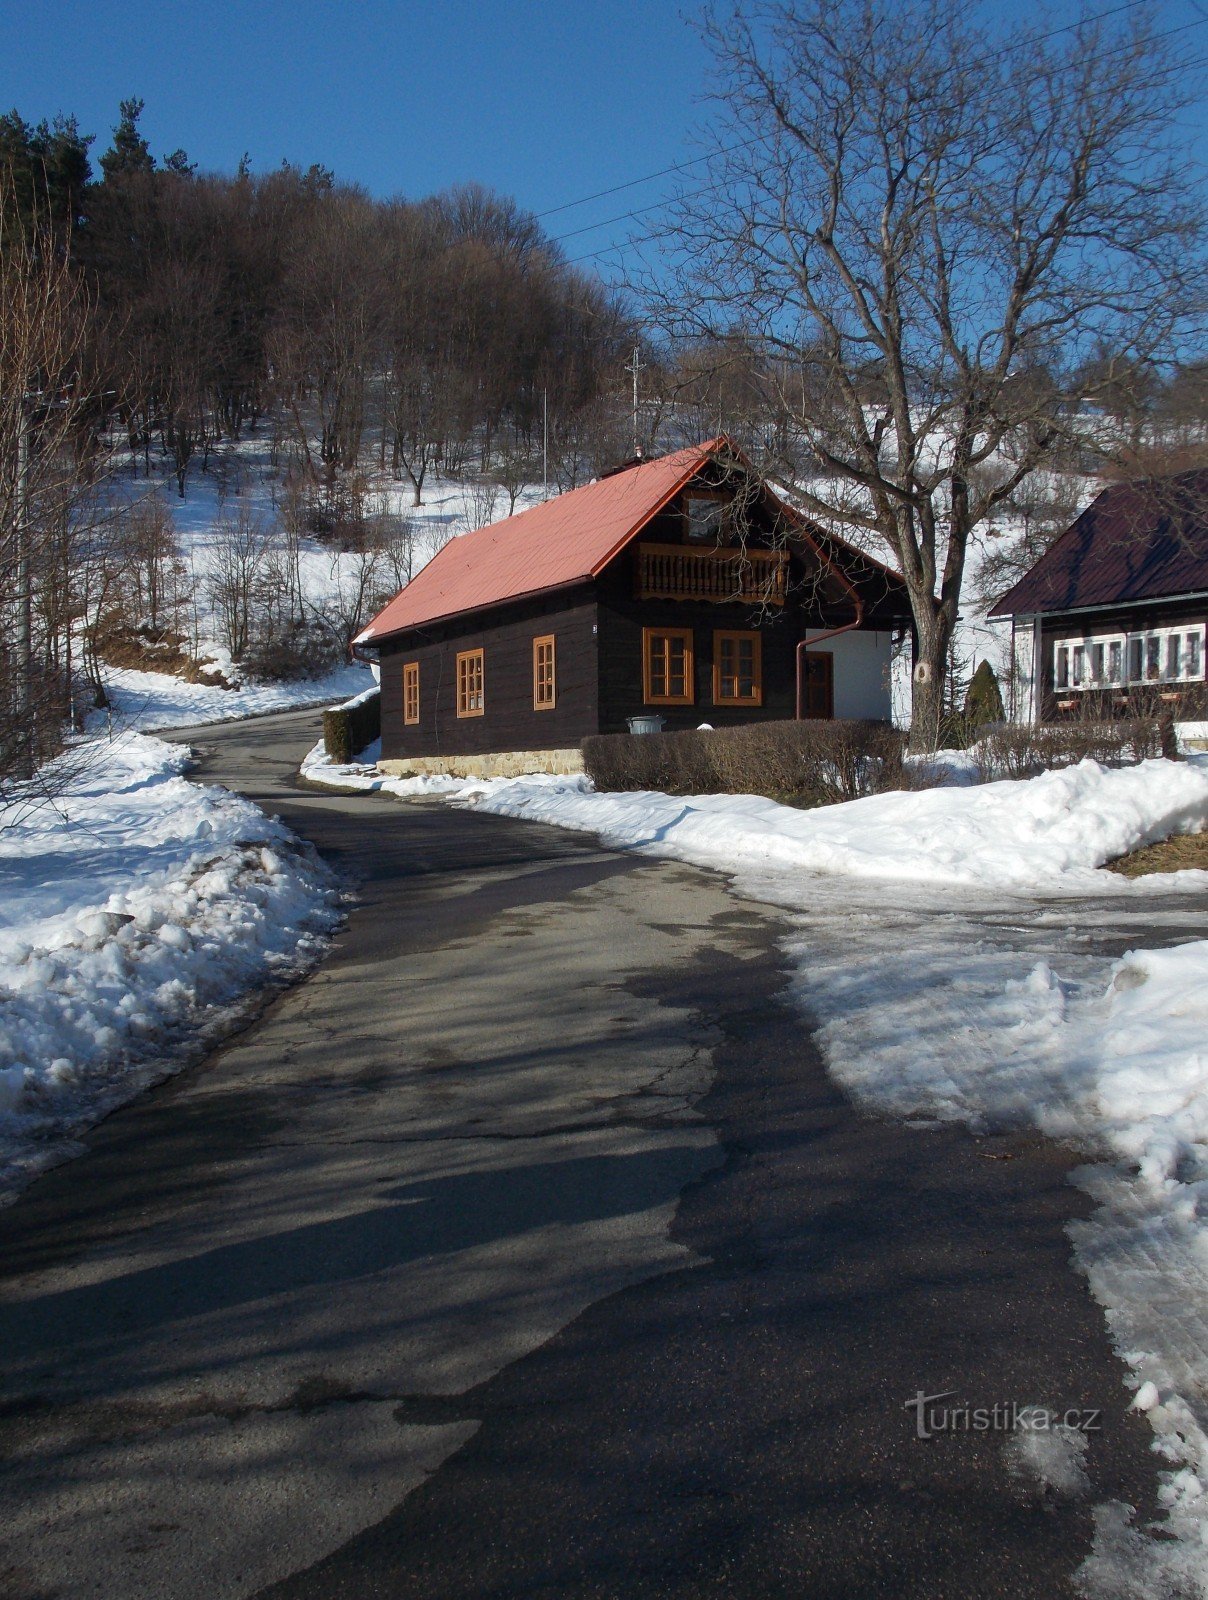 The corners of the village of Ublo near Zlín